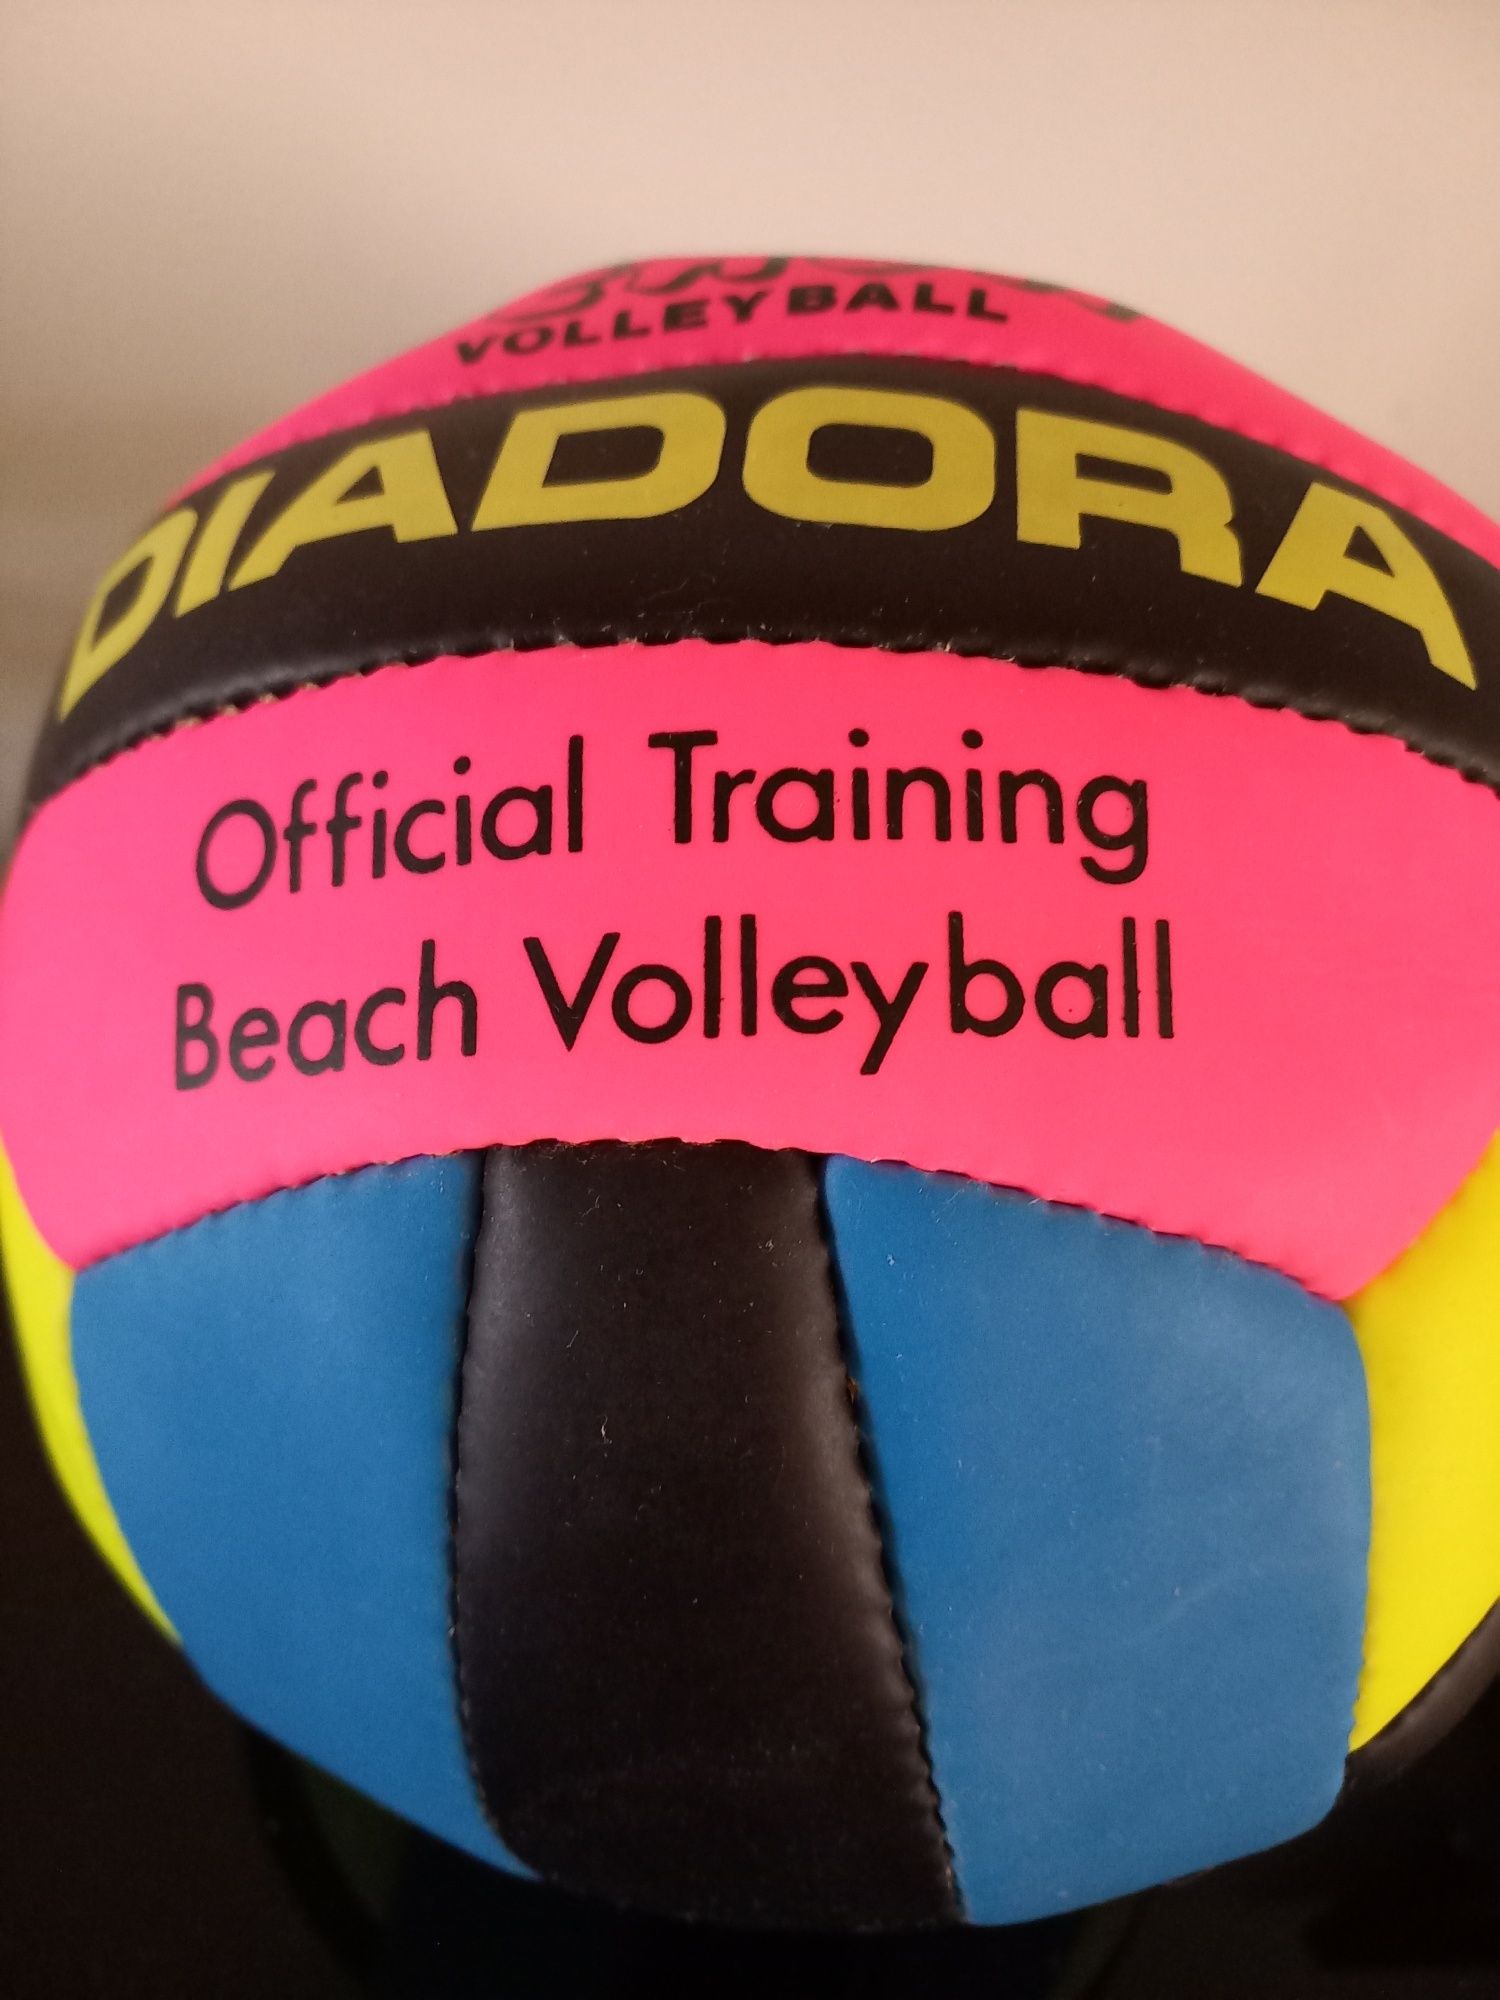 Мяч для пляжного волейбола, DIADORA, made in Pakistan